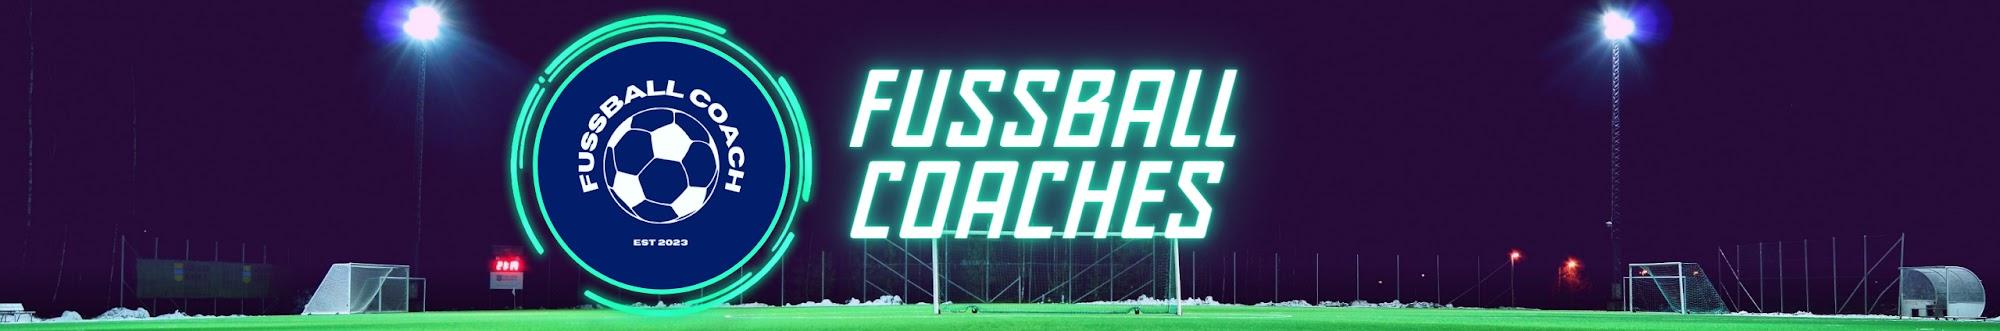 Fussball Coach